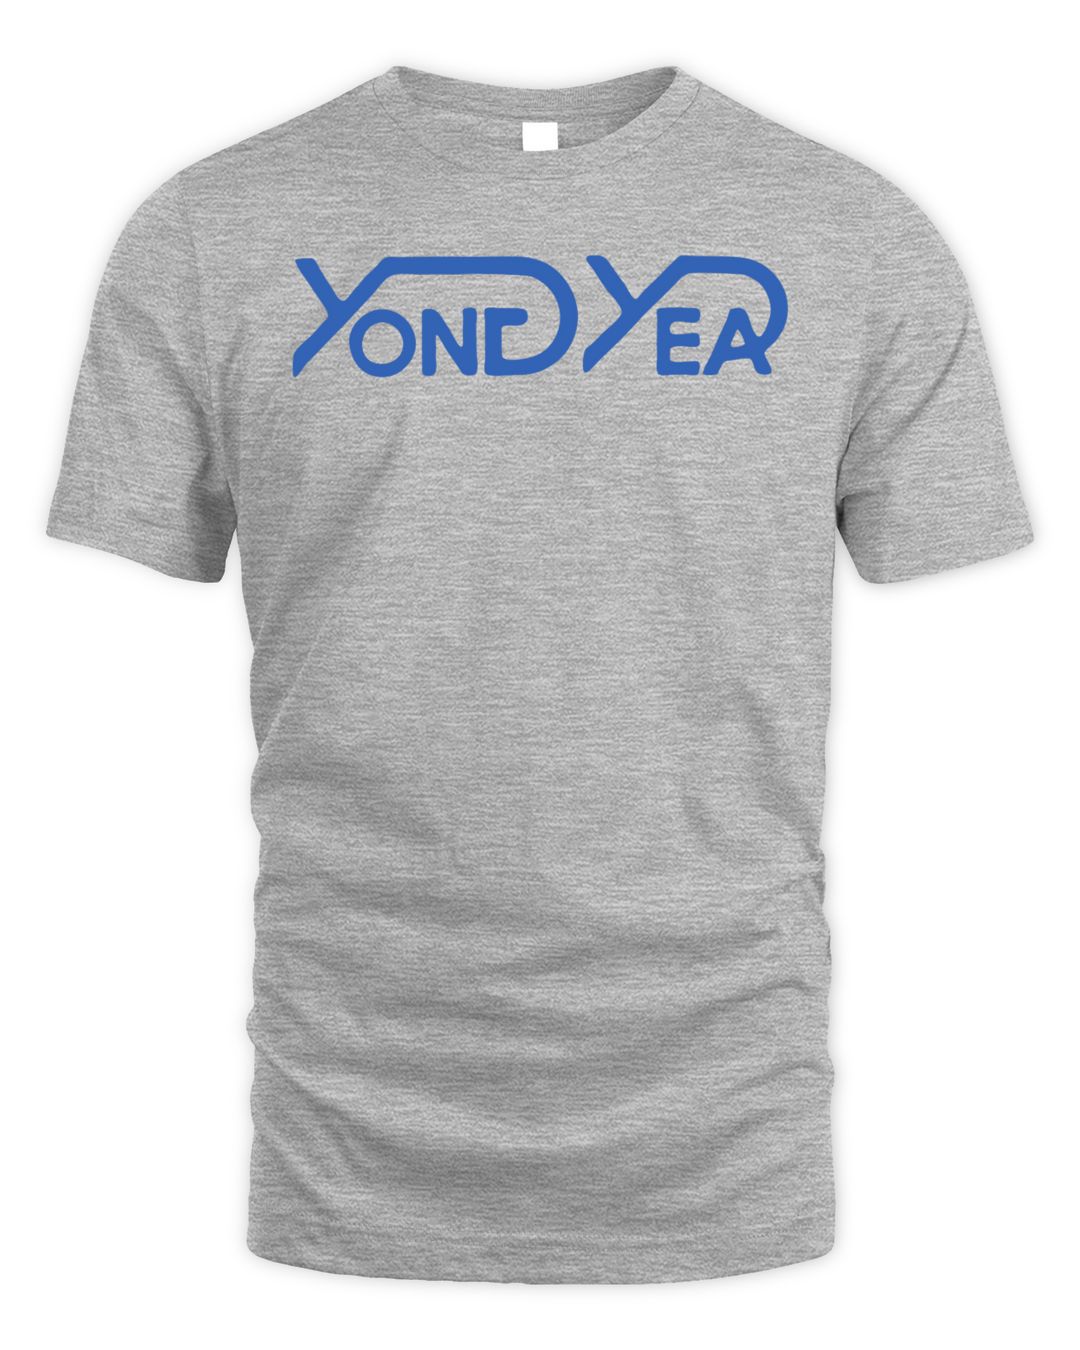 Yongyea Merch Logo Shirt